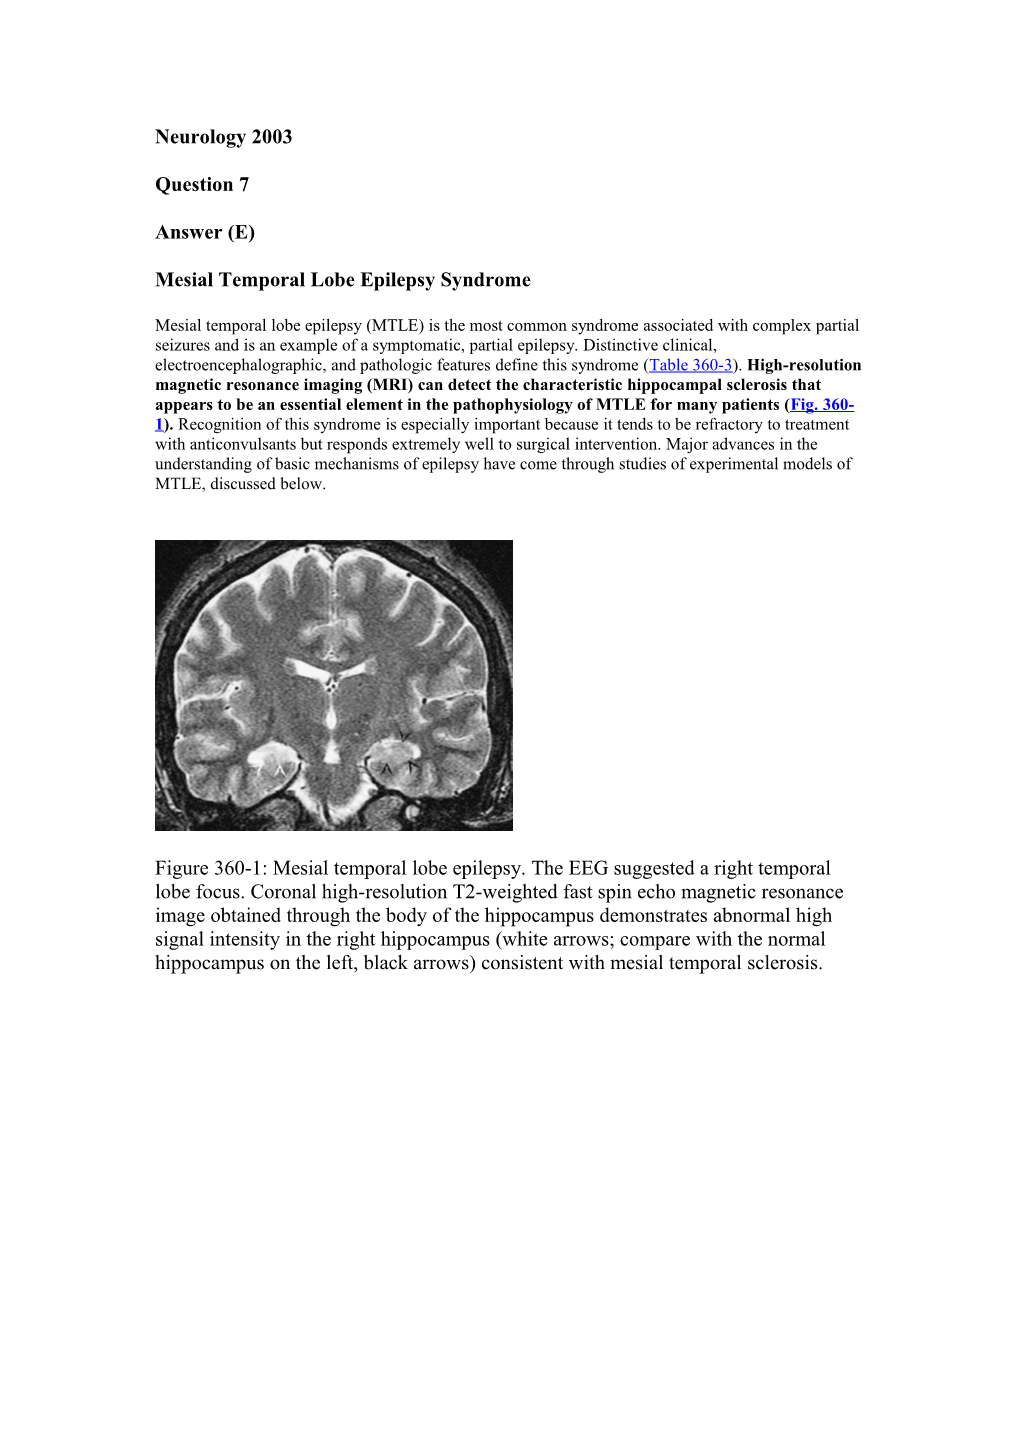 Mesial Temporal Lobe Epilepsy Syndrome